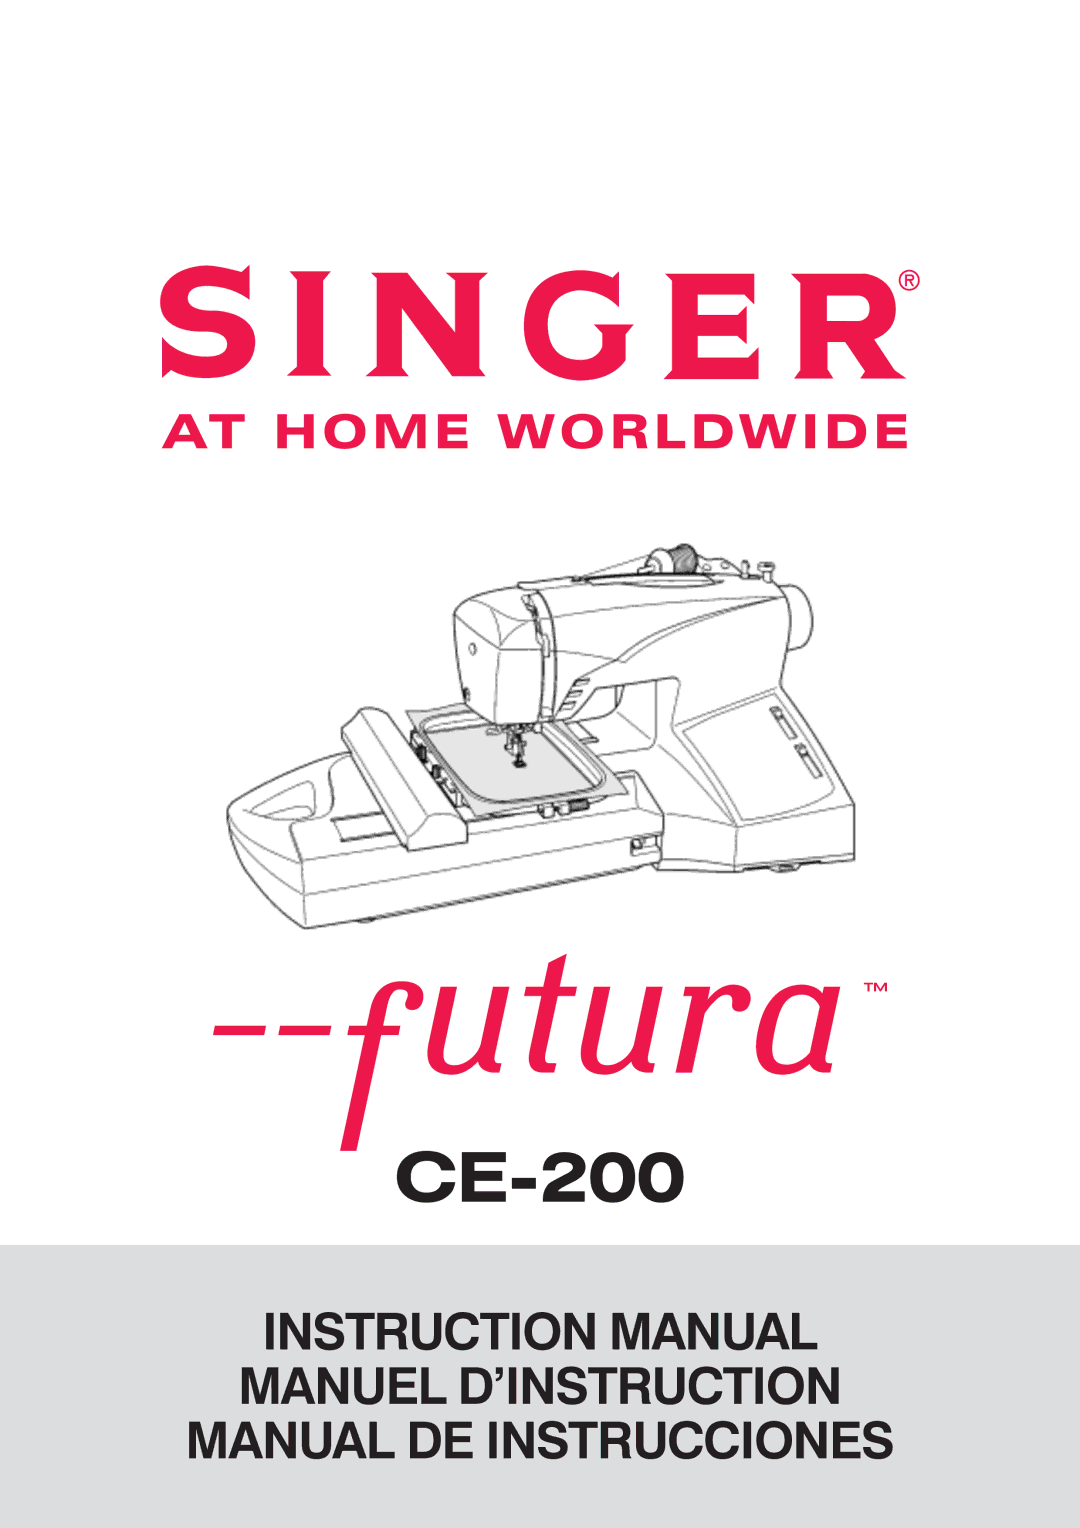 Singer CE-200 instruction manual 